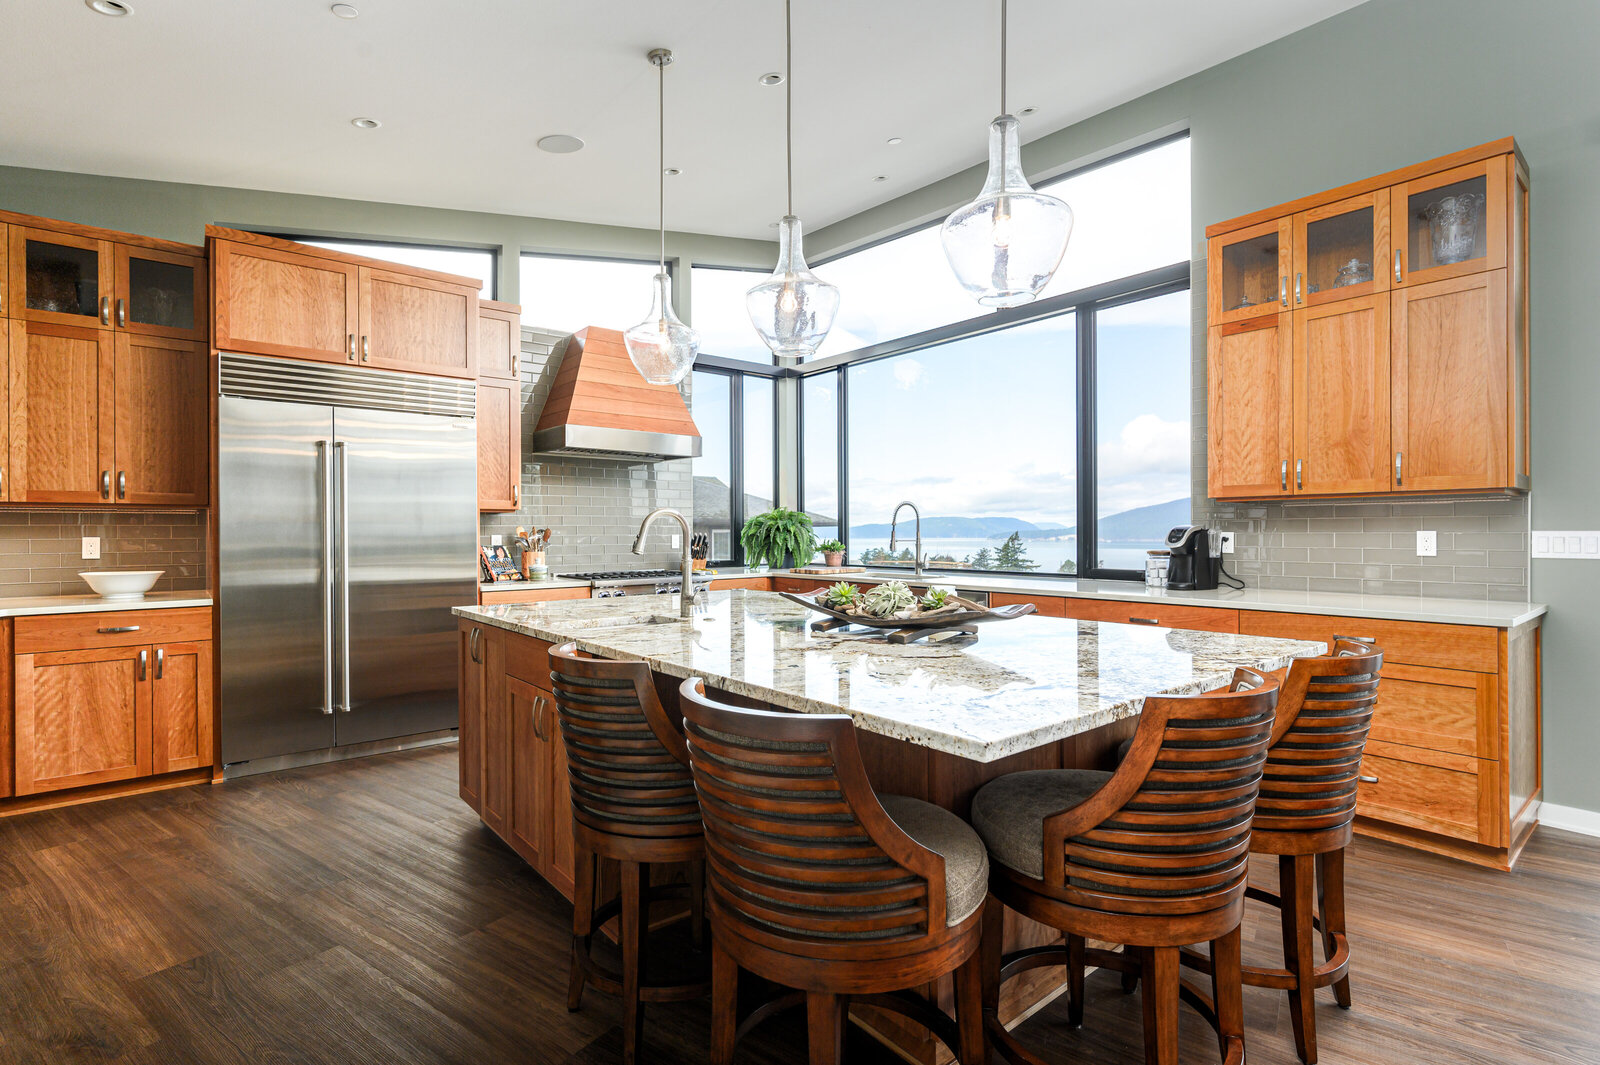 kitchen with ocean view